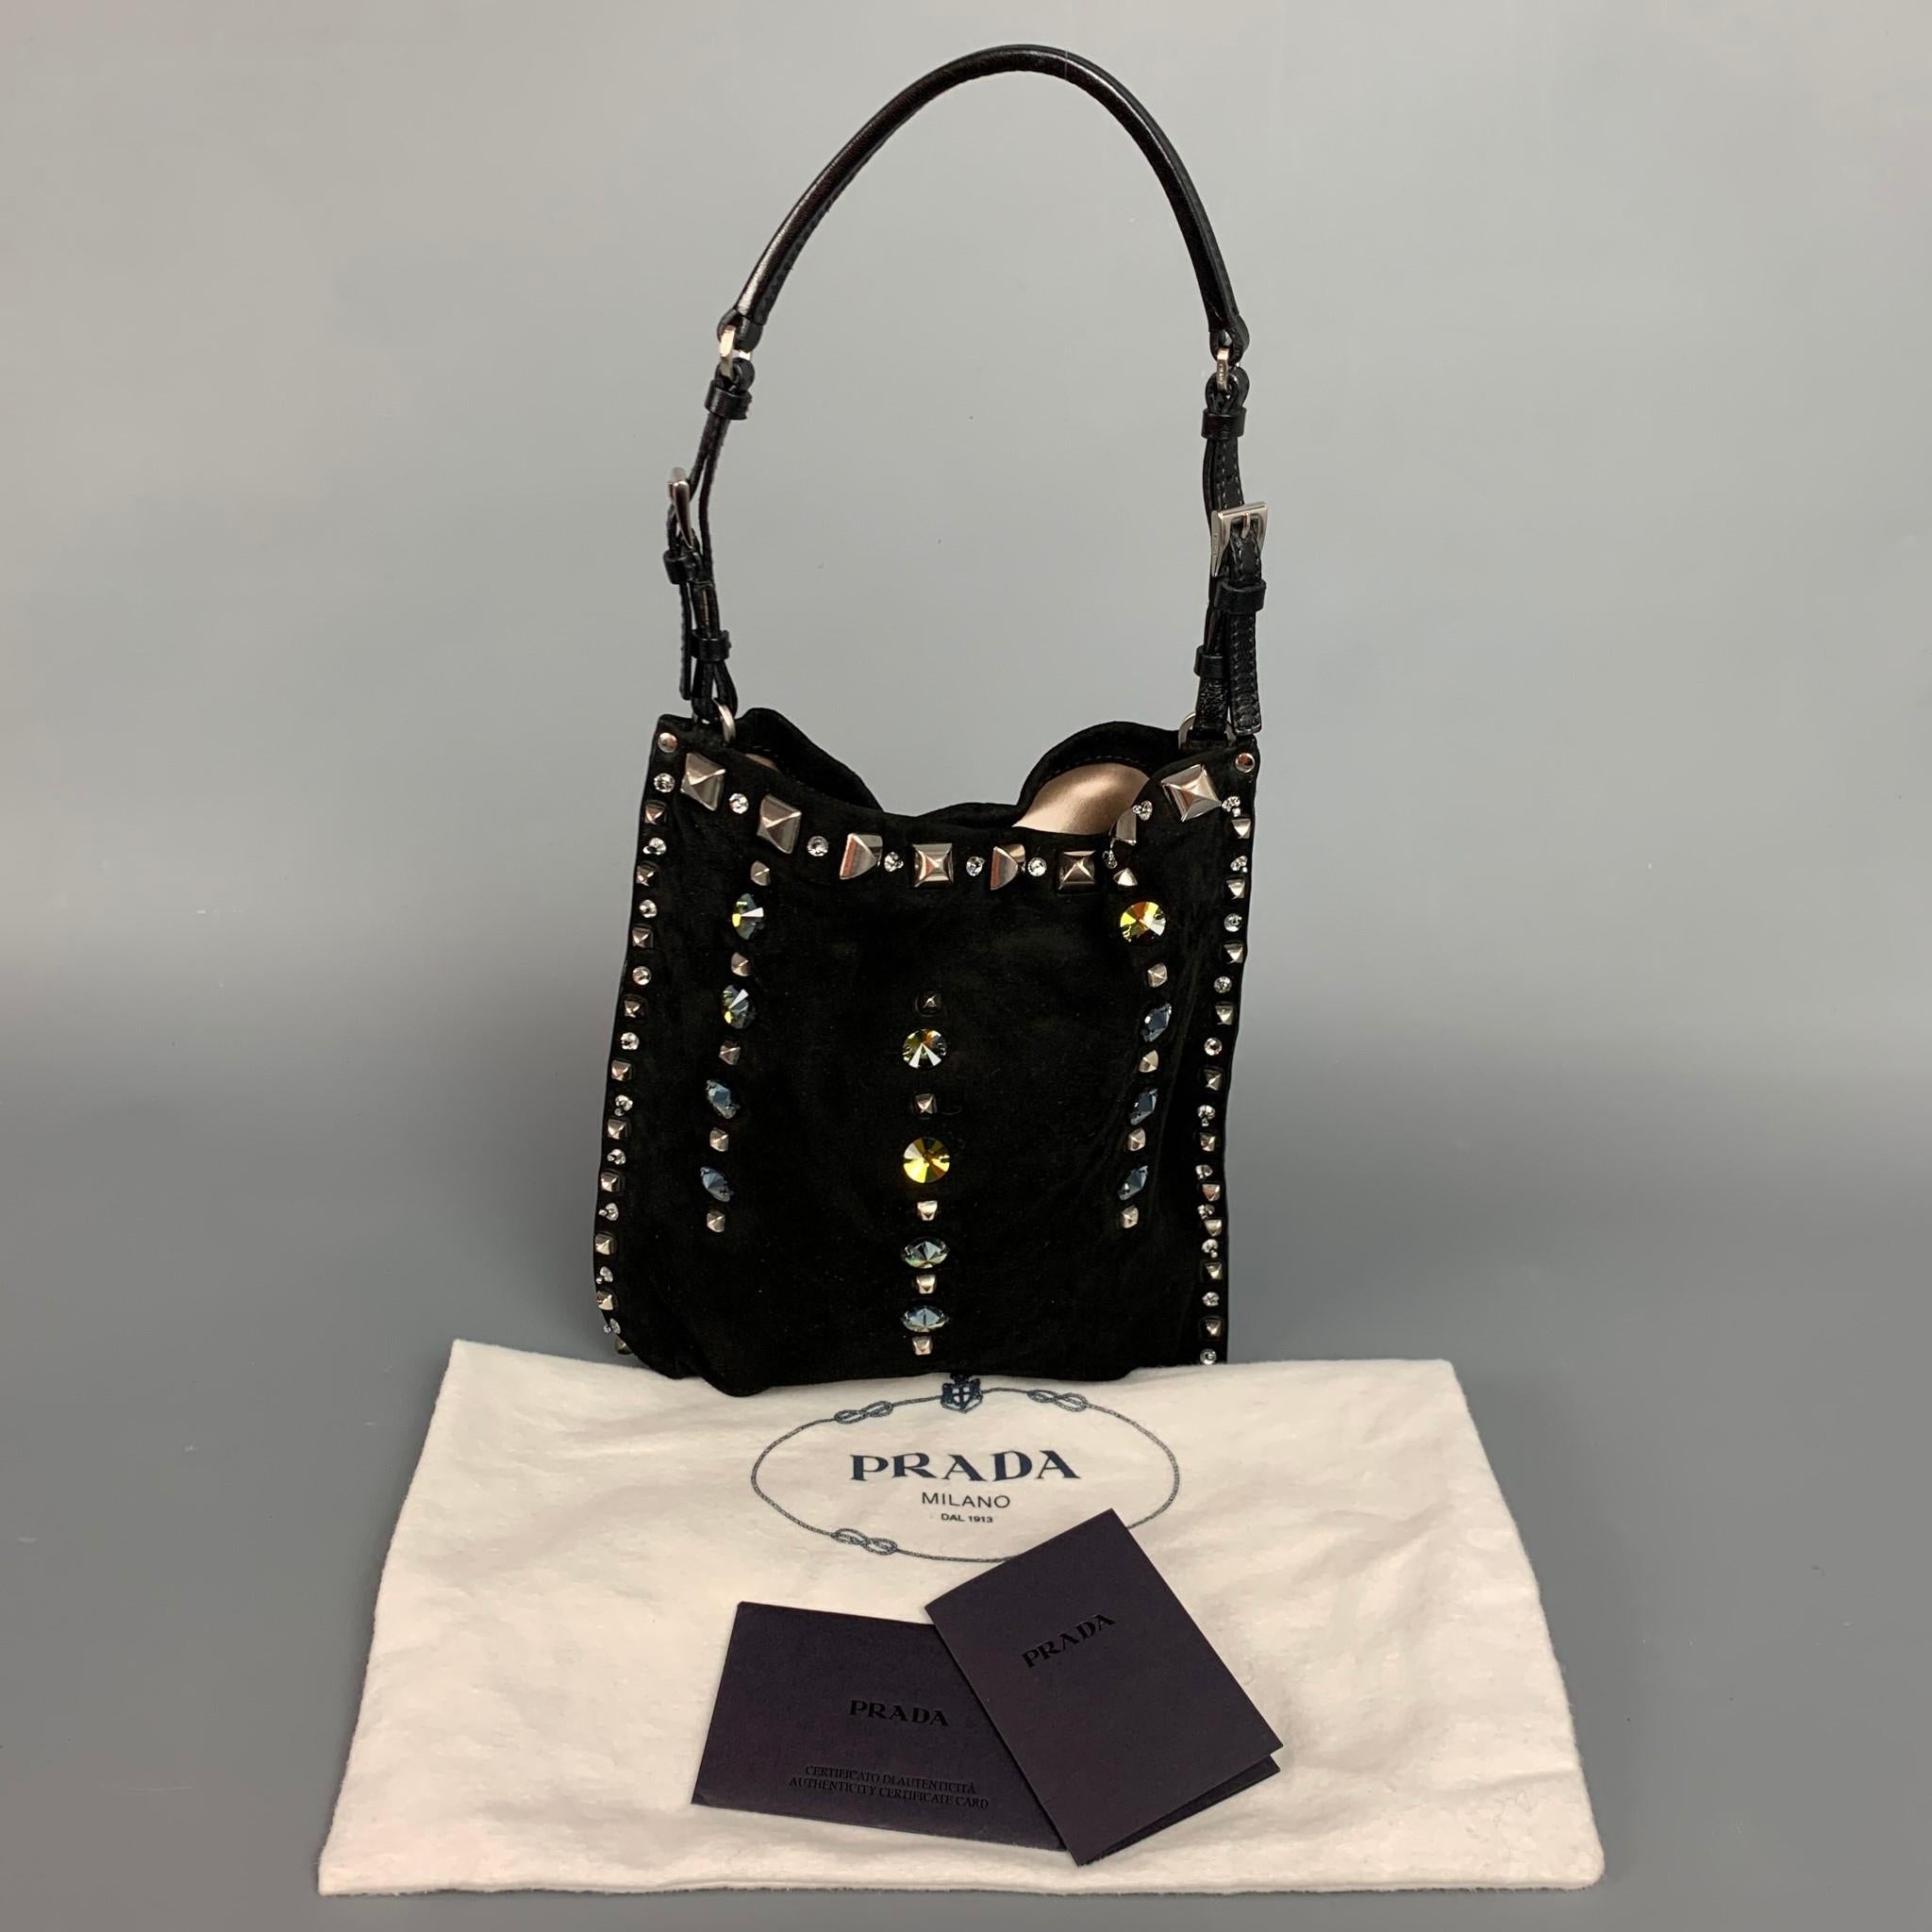 PRADA Black Suede Embellished Rhinestones Evening Handbag 5